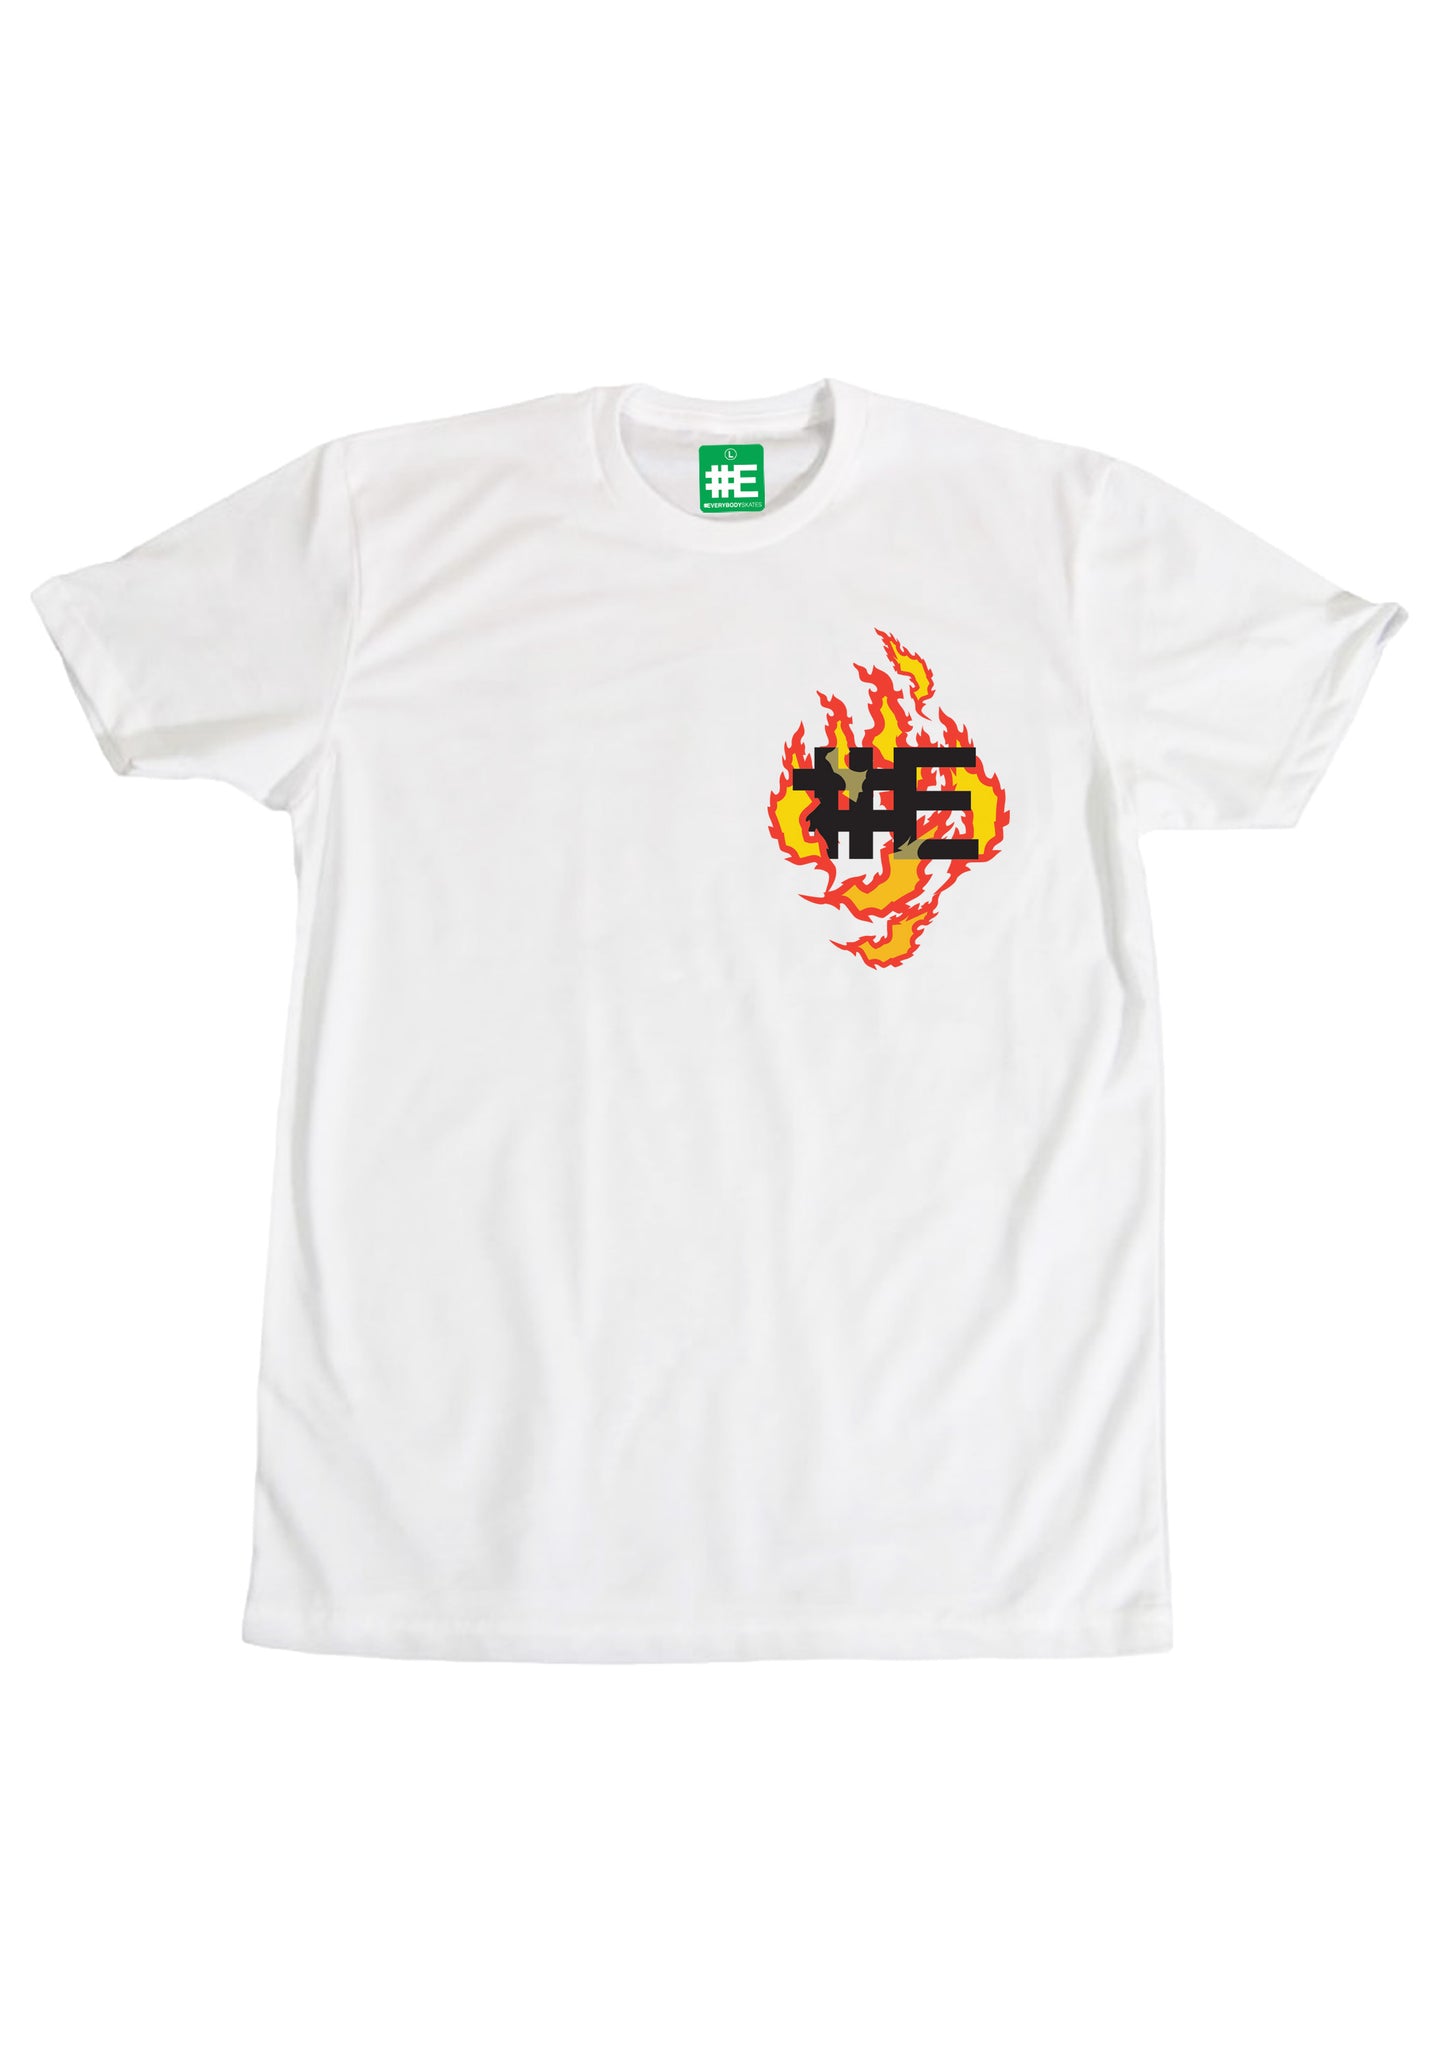 Burning Klansman Graphic T-shirt (BACK PRINT)